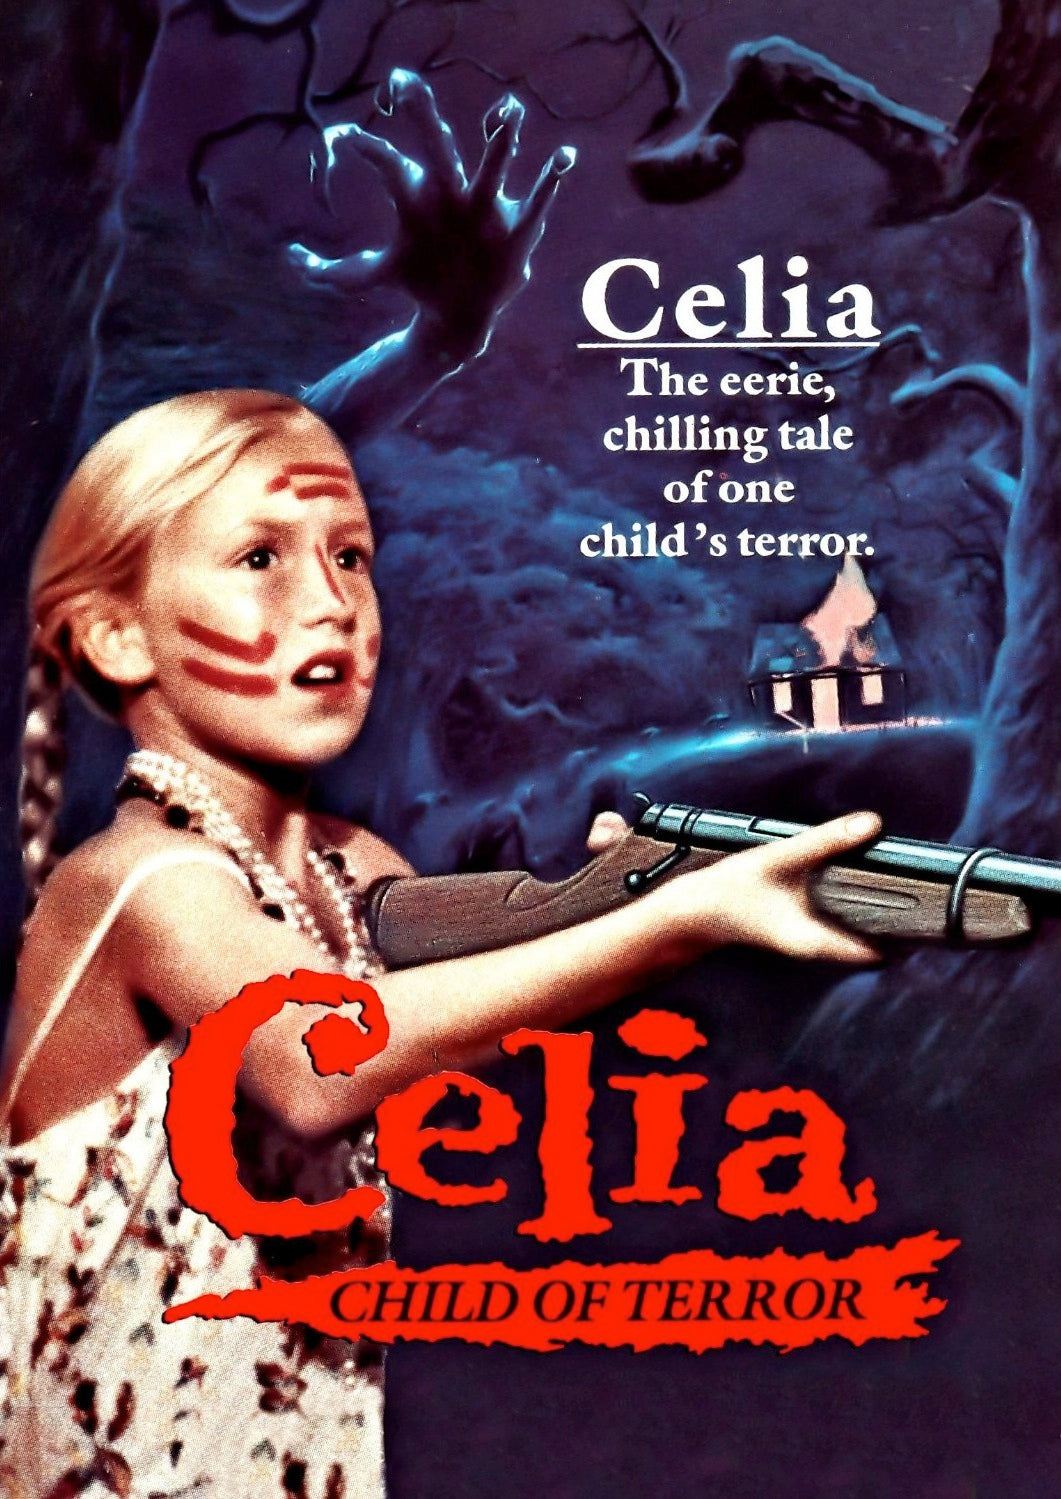 CELIA: CHILD OF TERROR DVD